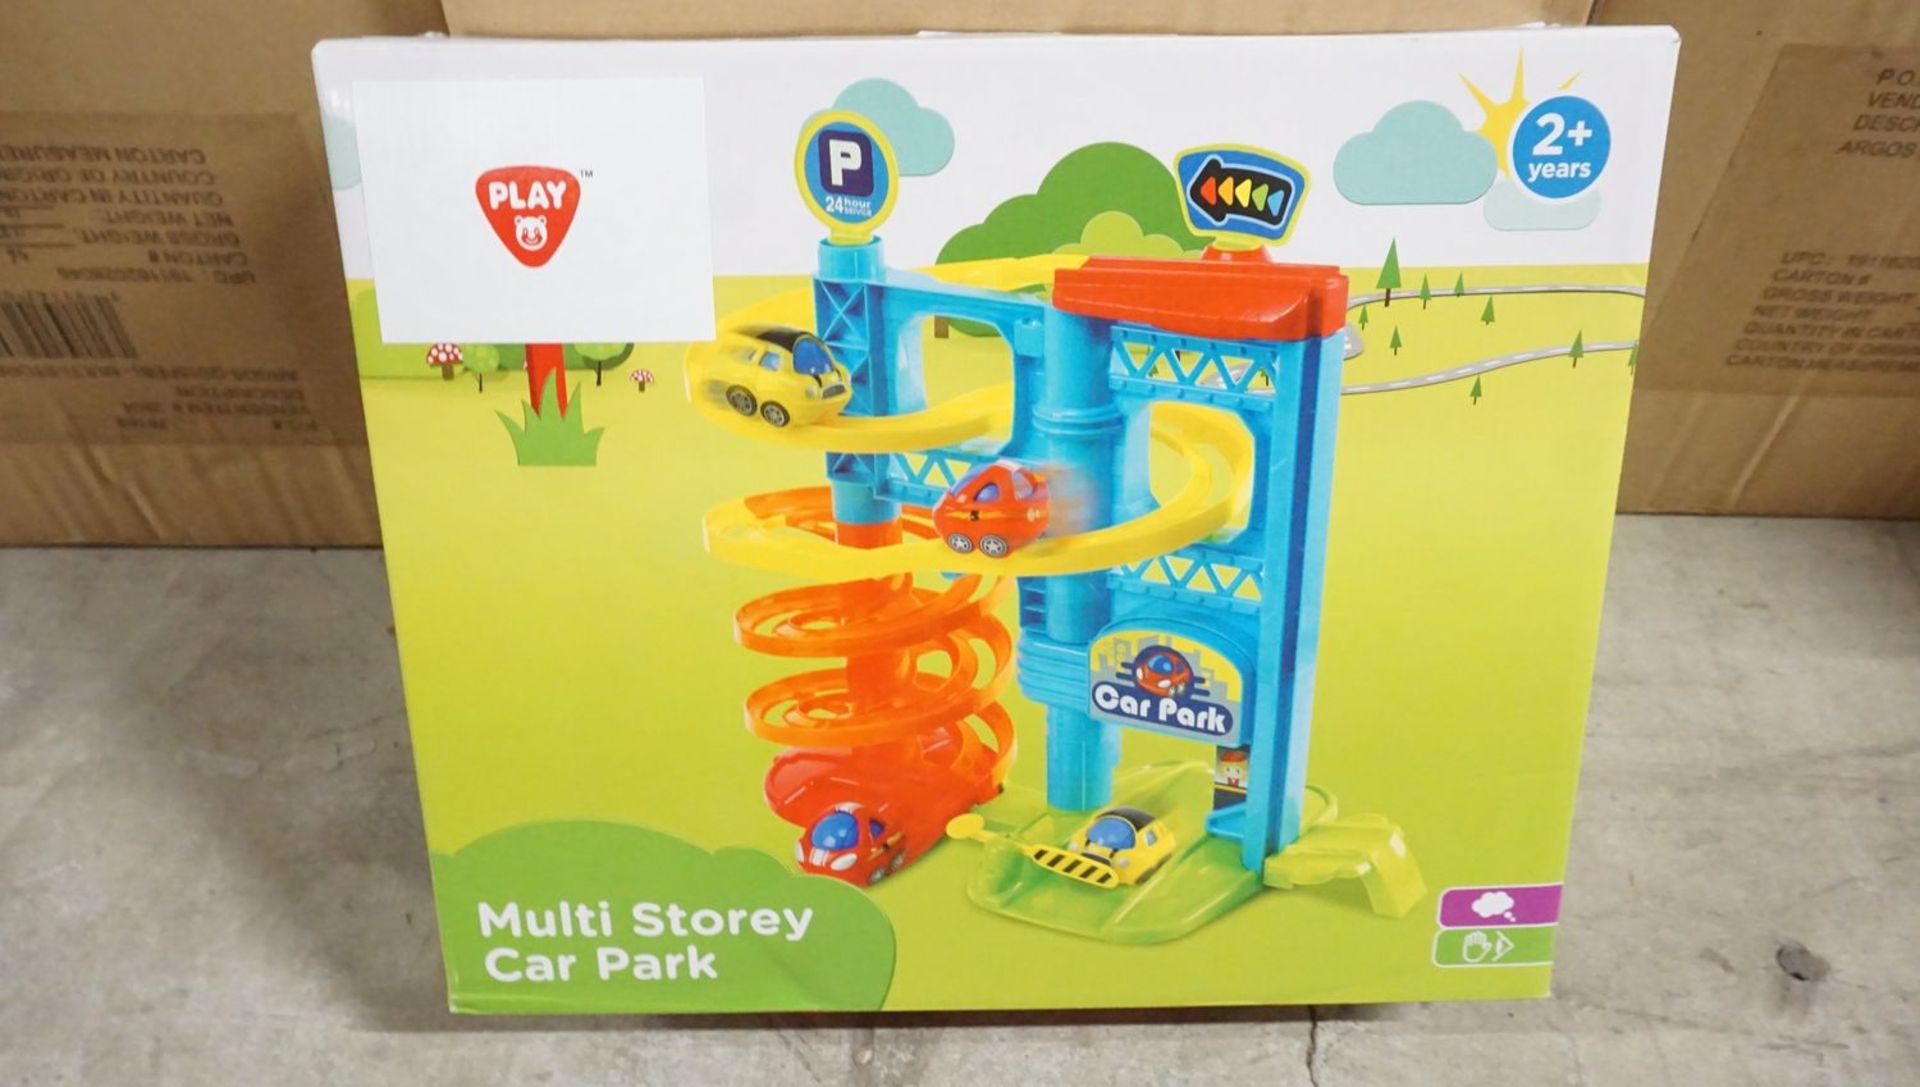 BOXES - PLAY MULTI-STOREY CAR PARK (3 PCS/BOX) - Image 2 of 2